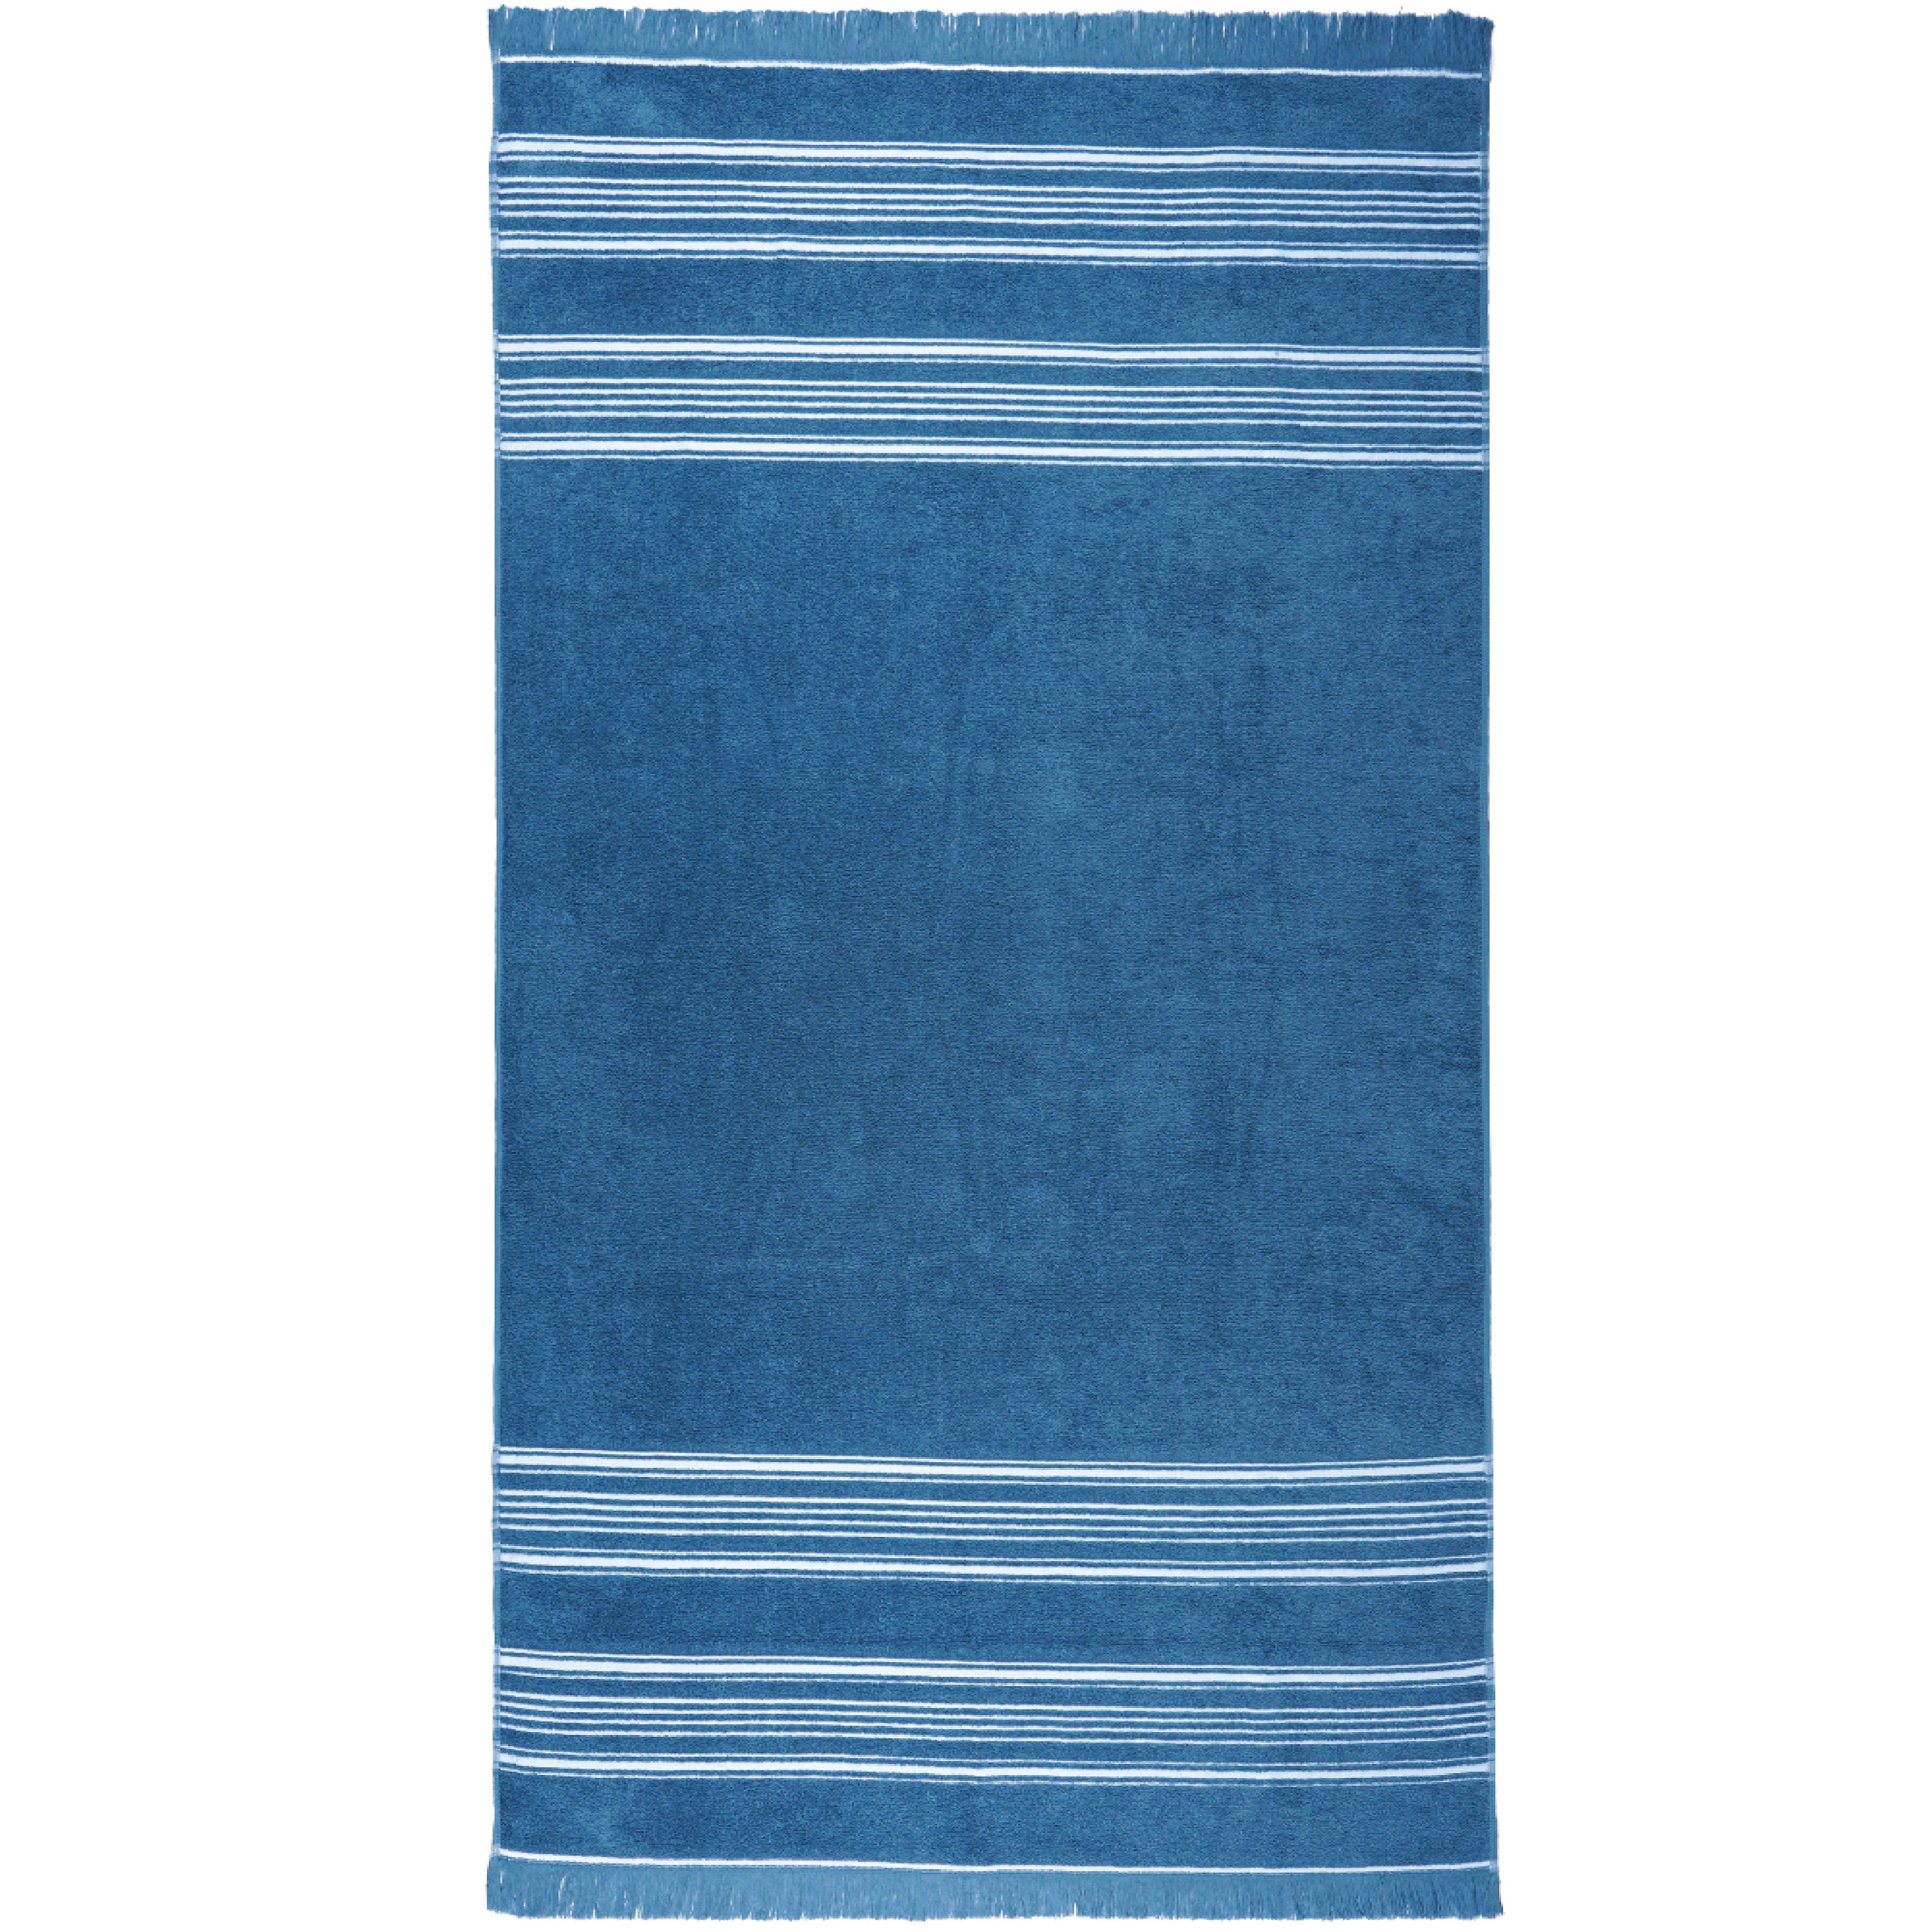 Antalya Beach Towel - Granite Blue